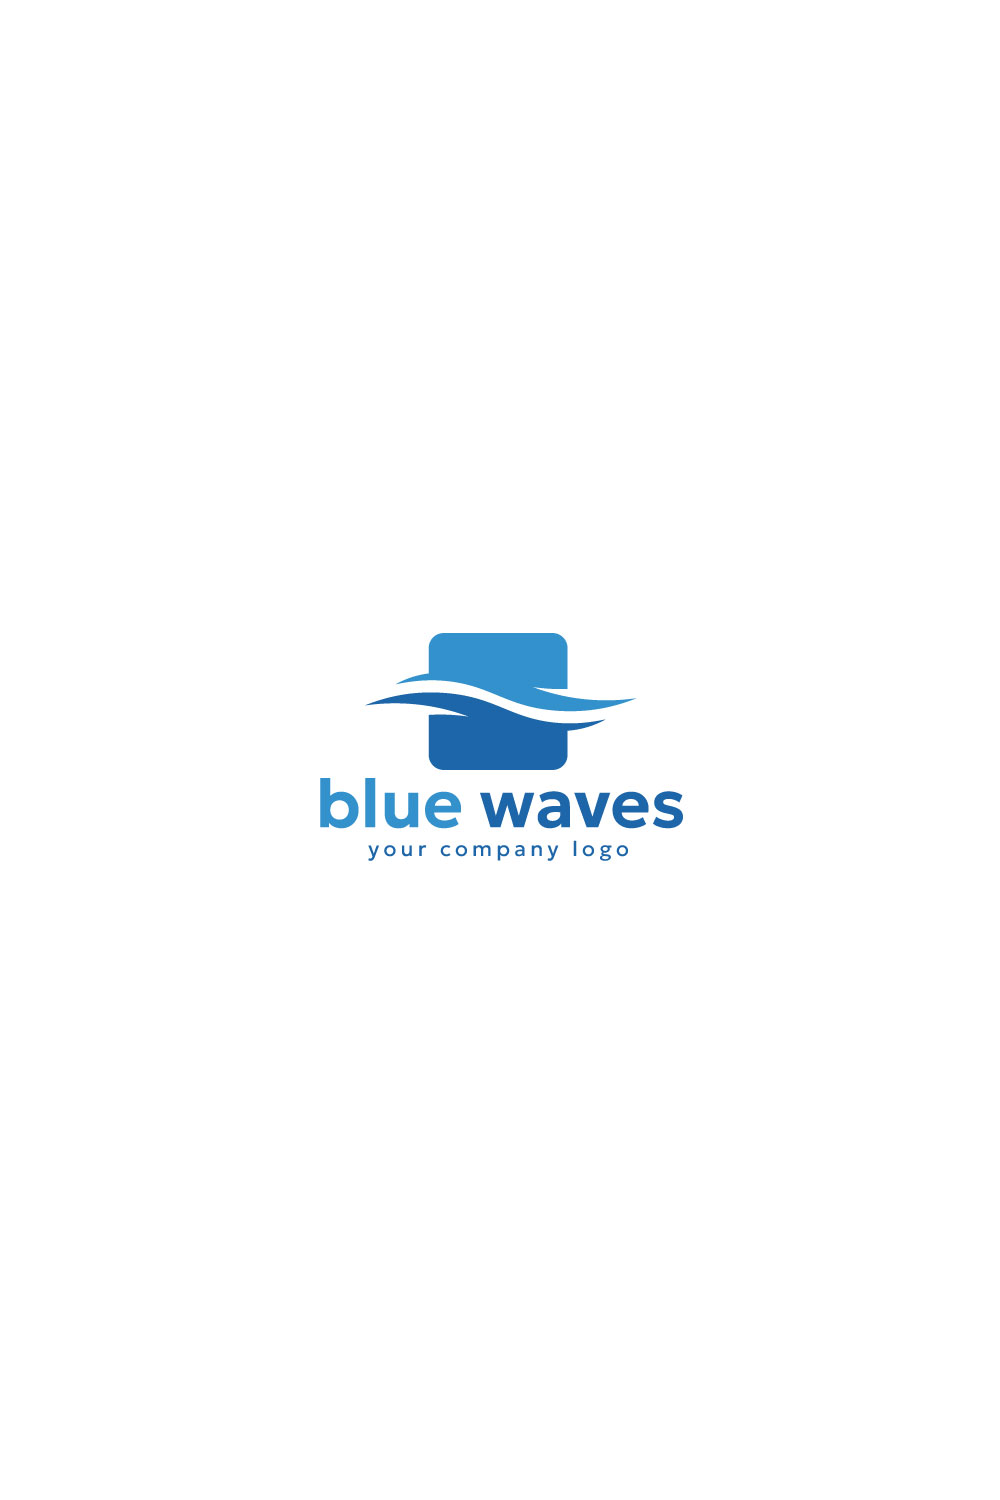 blue waves logo pint 933